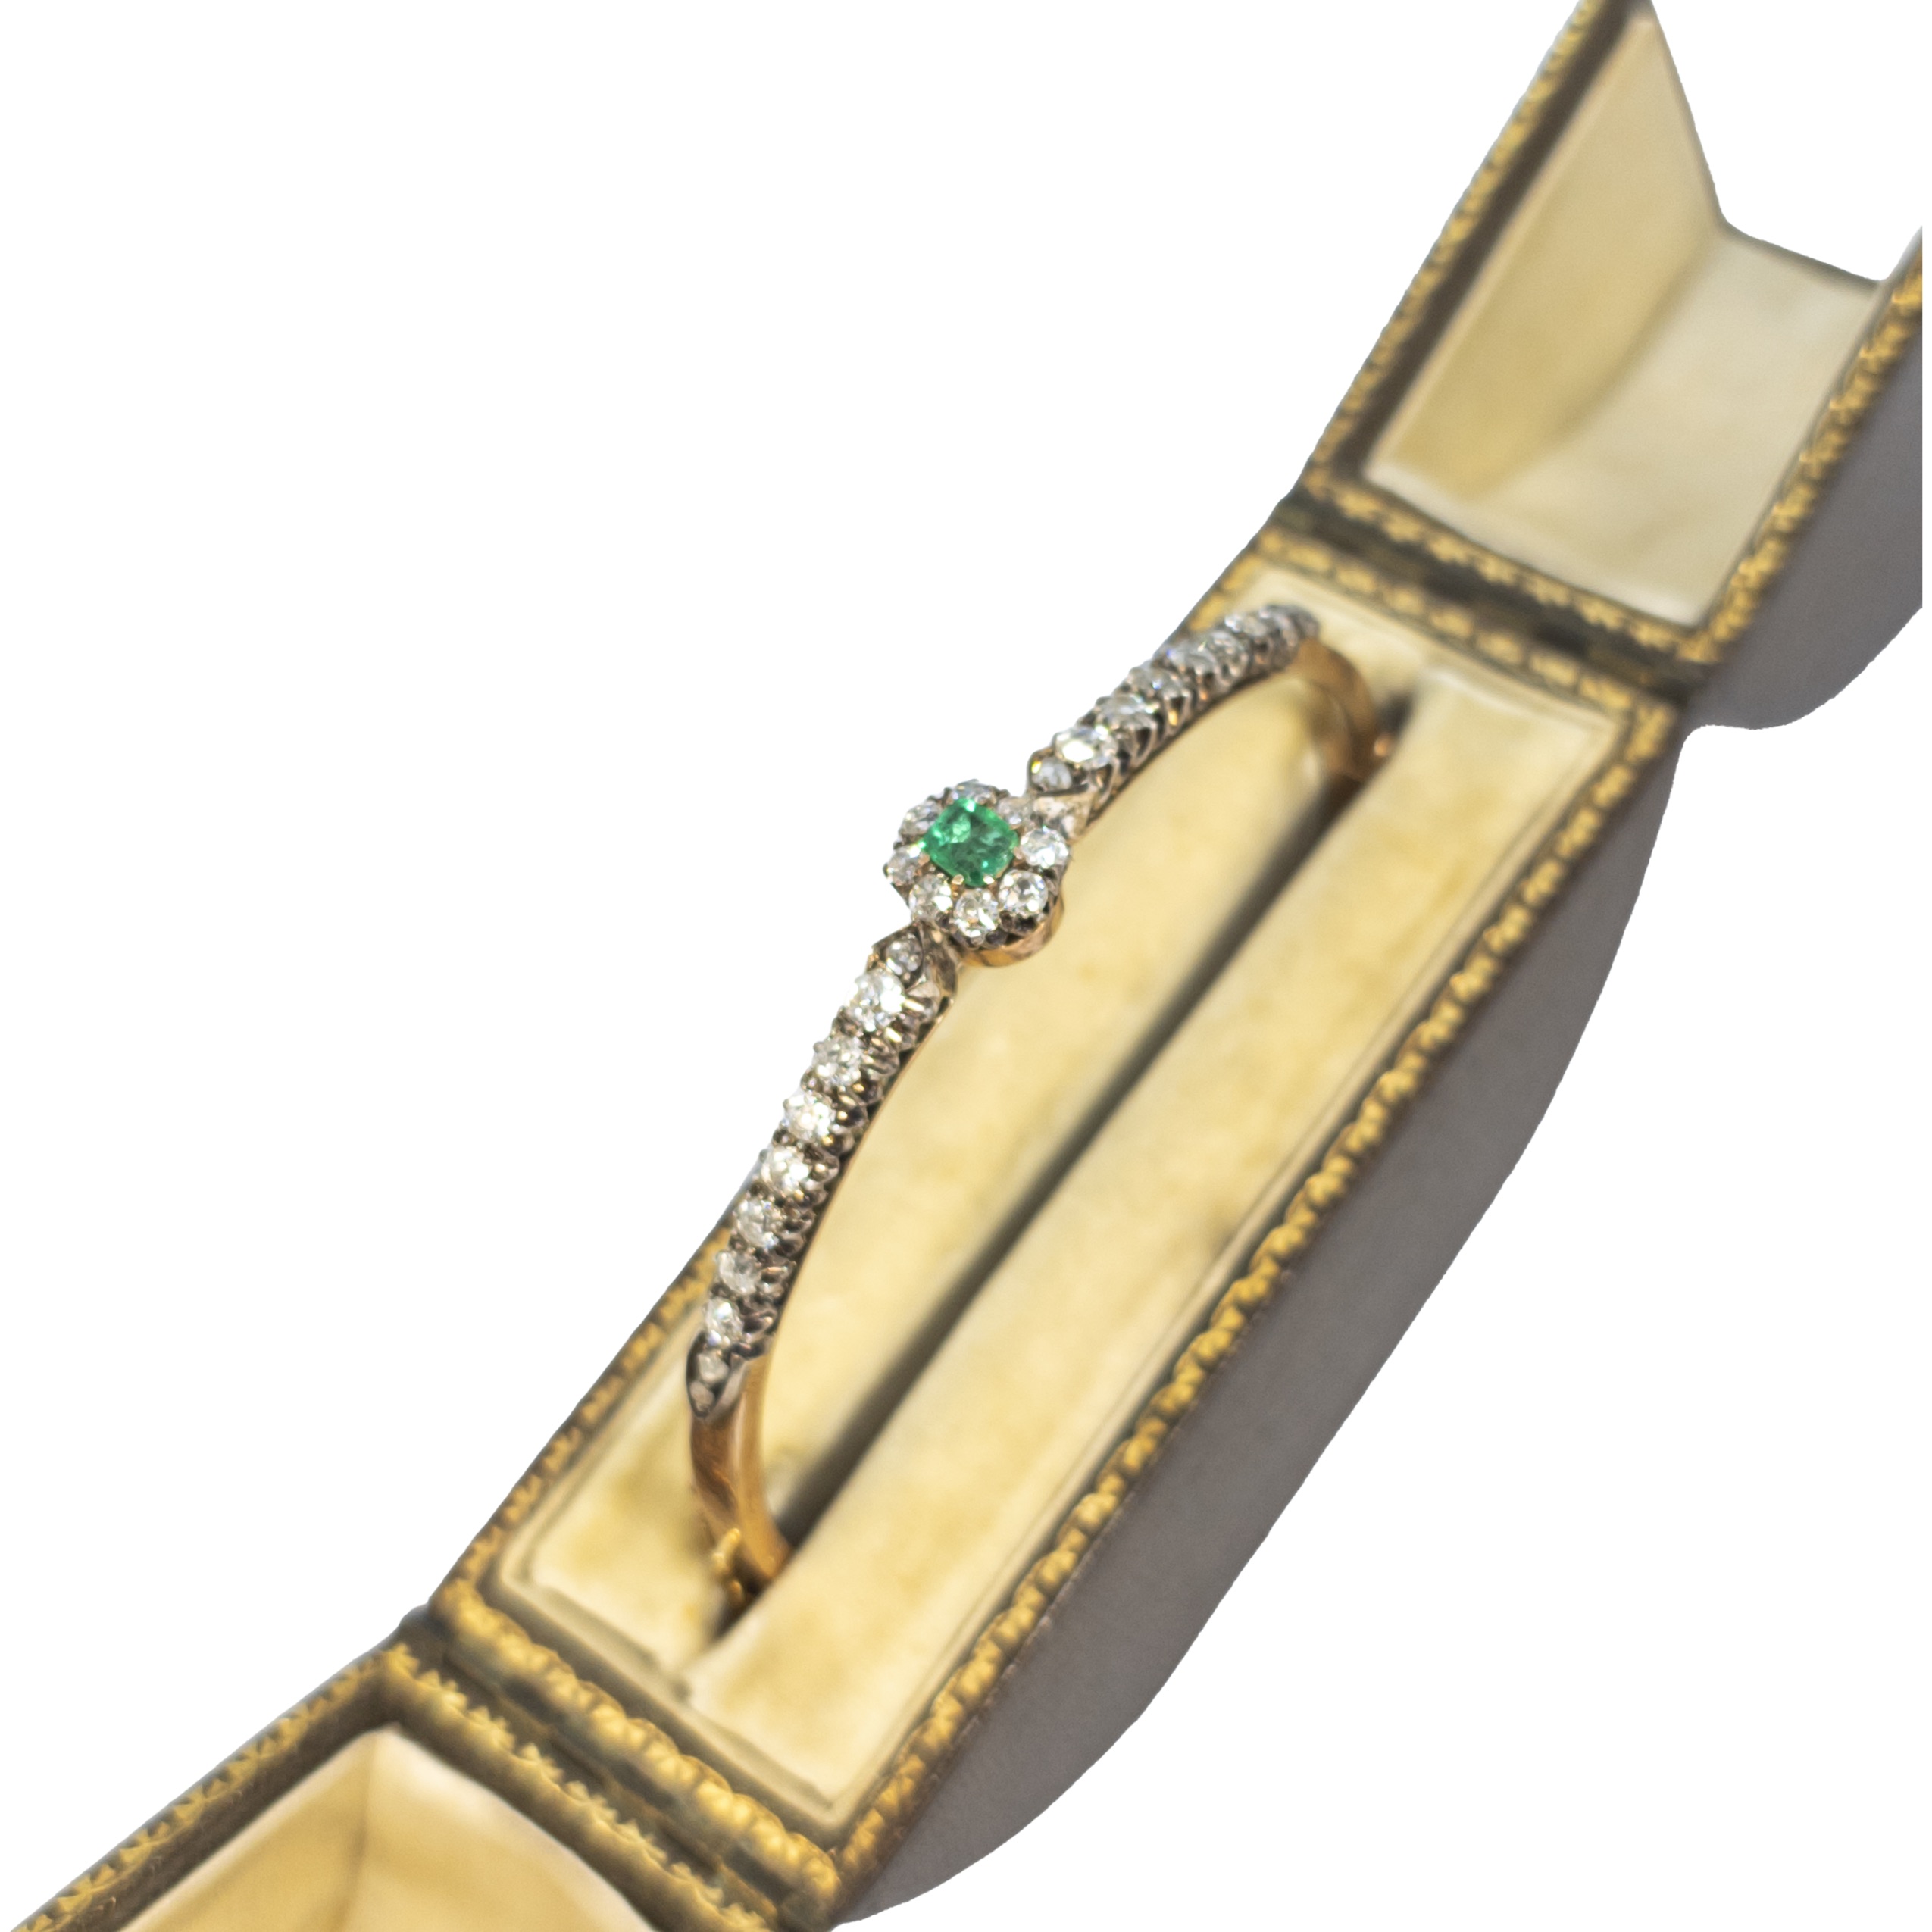 British, Circa 1880, A pretty emerald, diamond and 18 carat rose gold bangle - Image 3 of 3